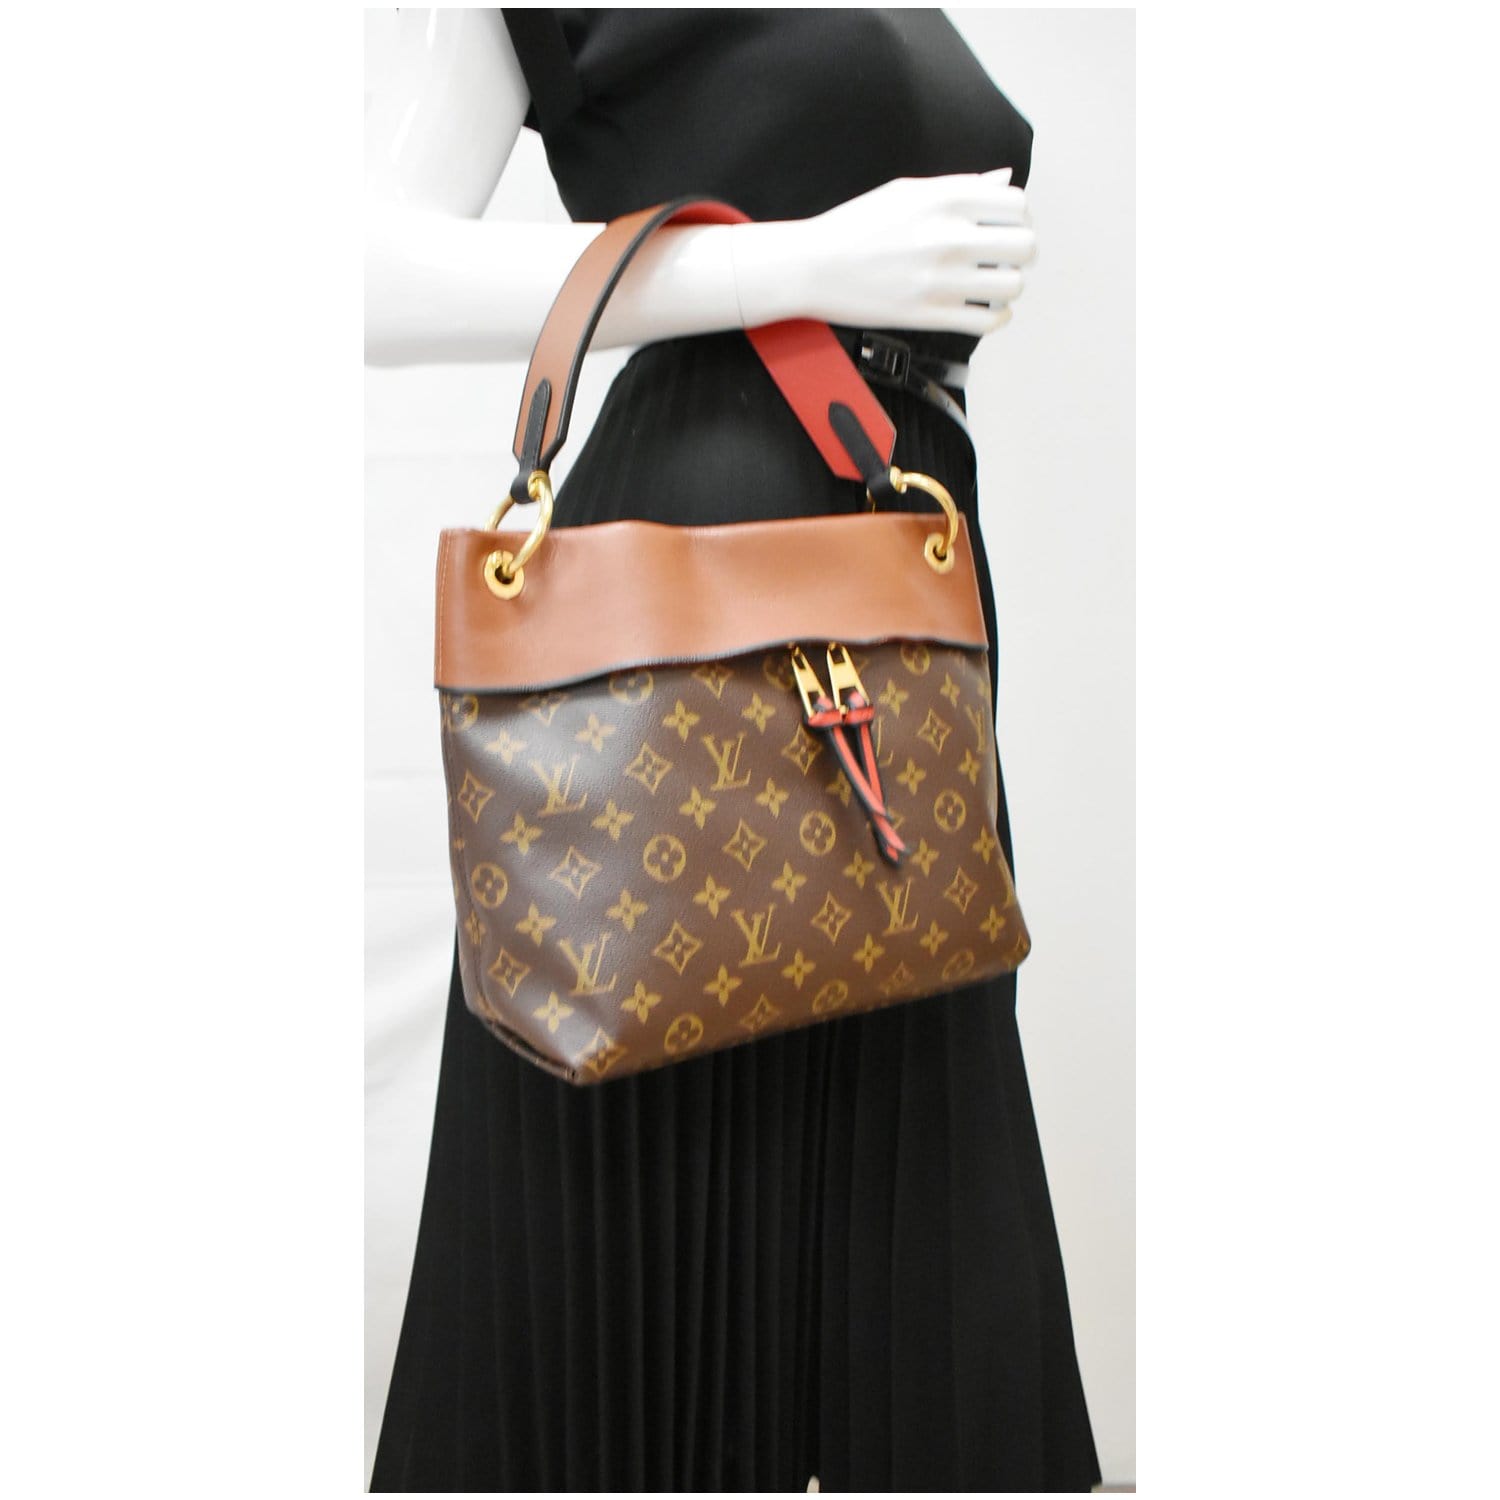 Louis Vuitton Tuileries Besace Bag Crossbody Monogram Canvas Brown Caramel